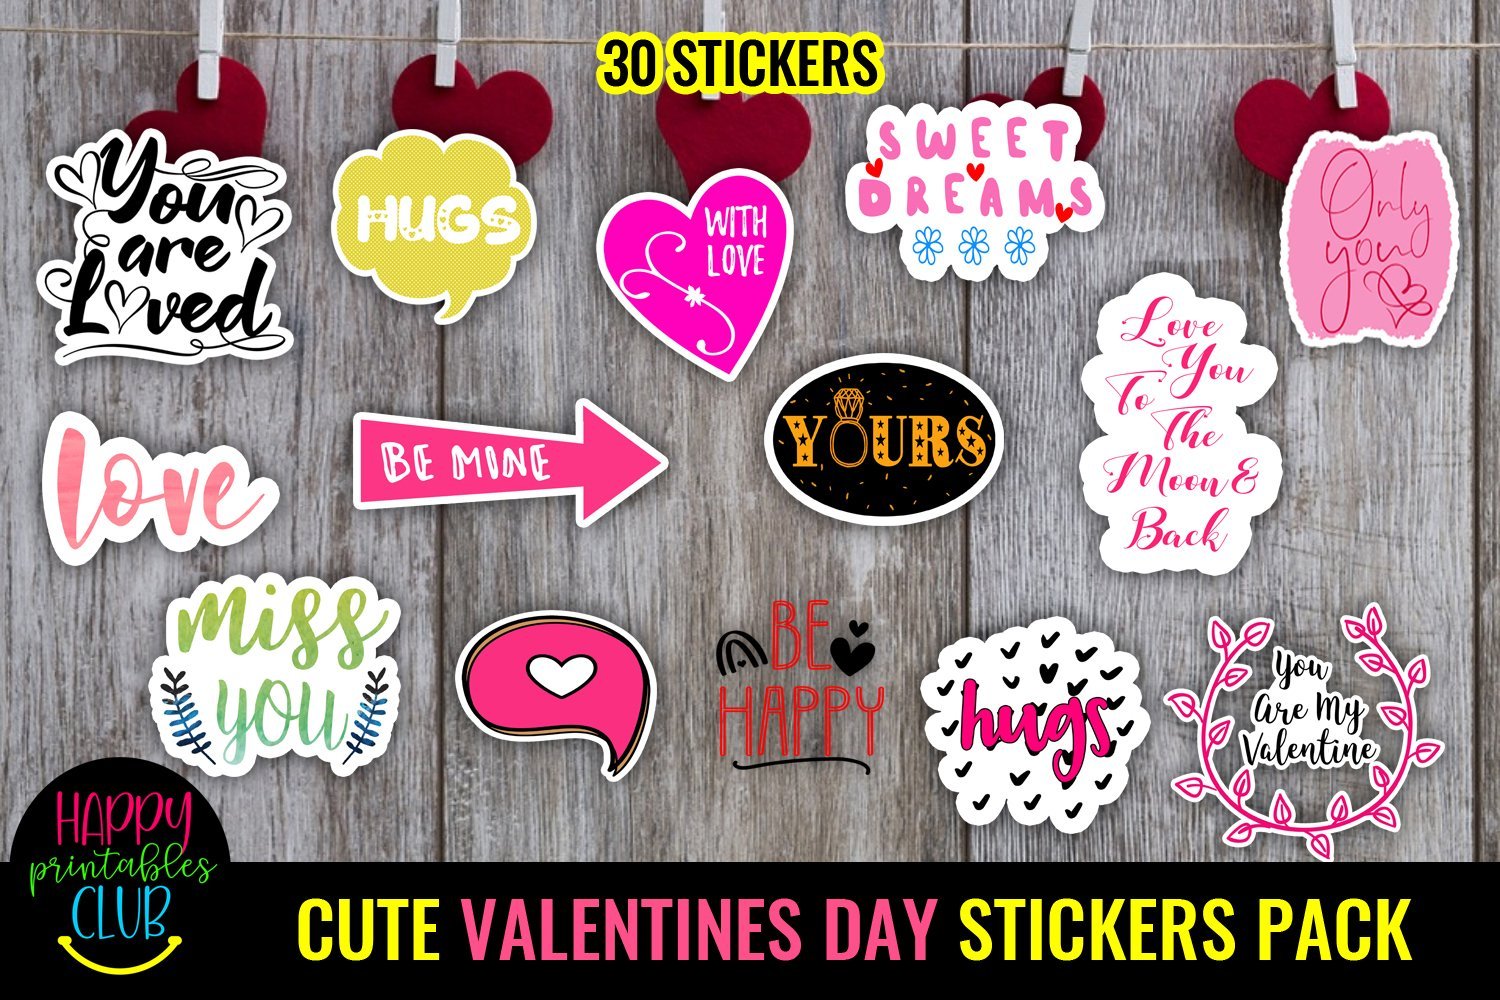 Valentine's Day Stickers I Printable Valentines Day Stickers - So Fontsy